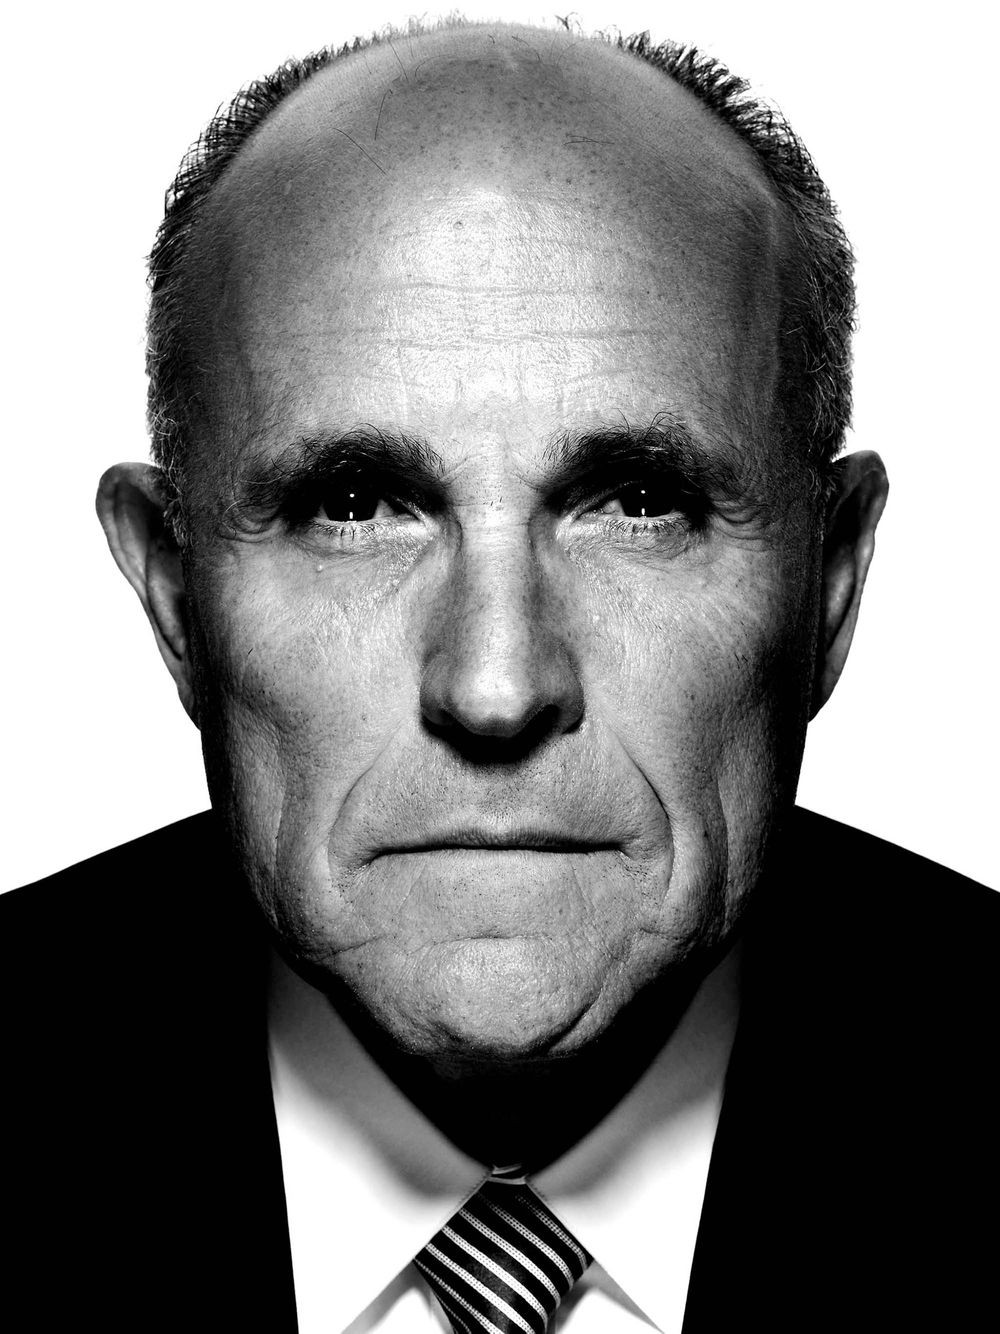 Rudy Giulianni